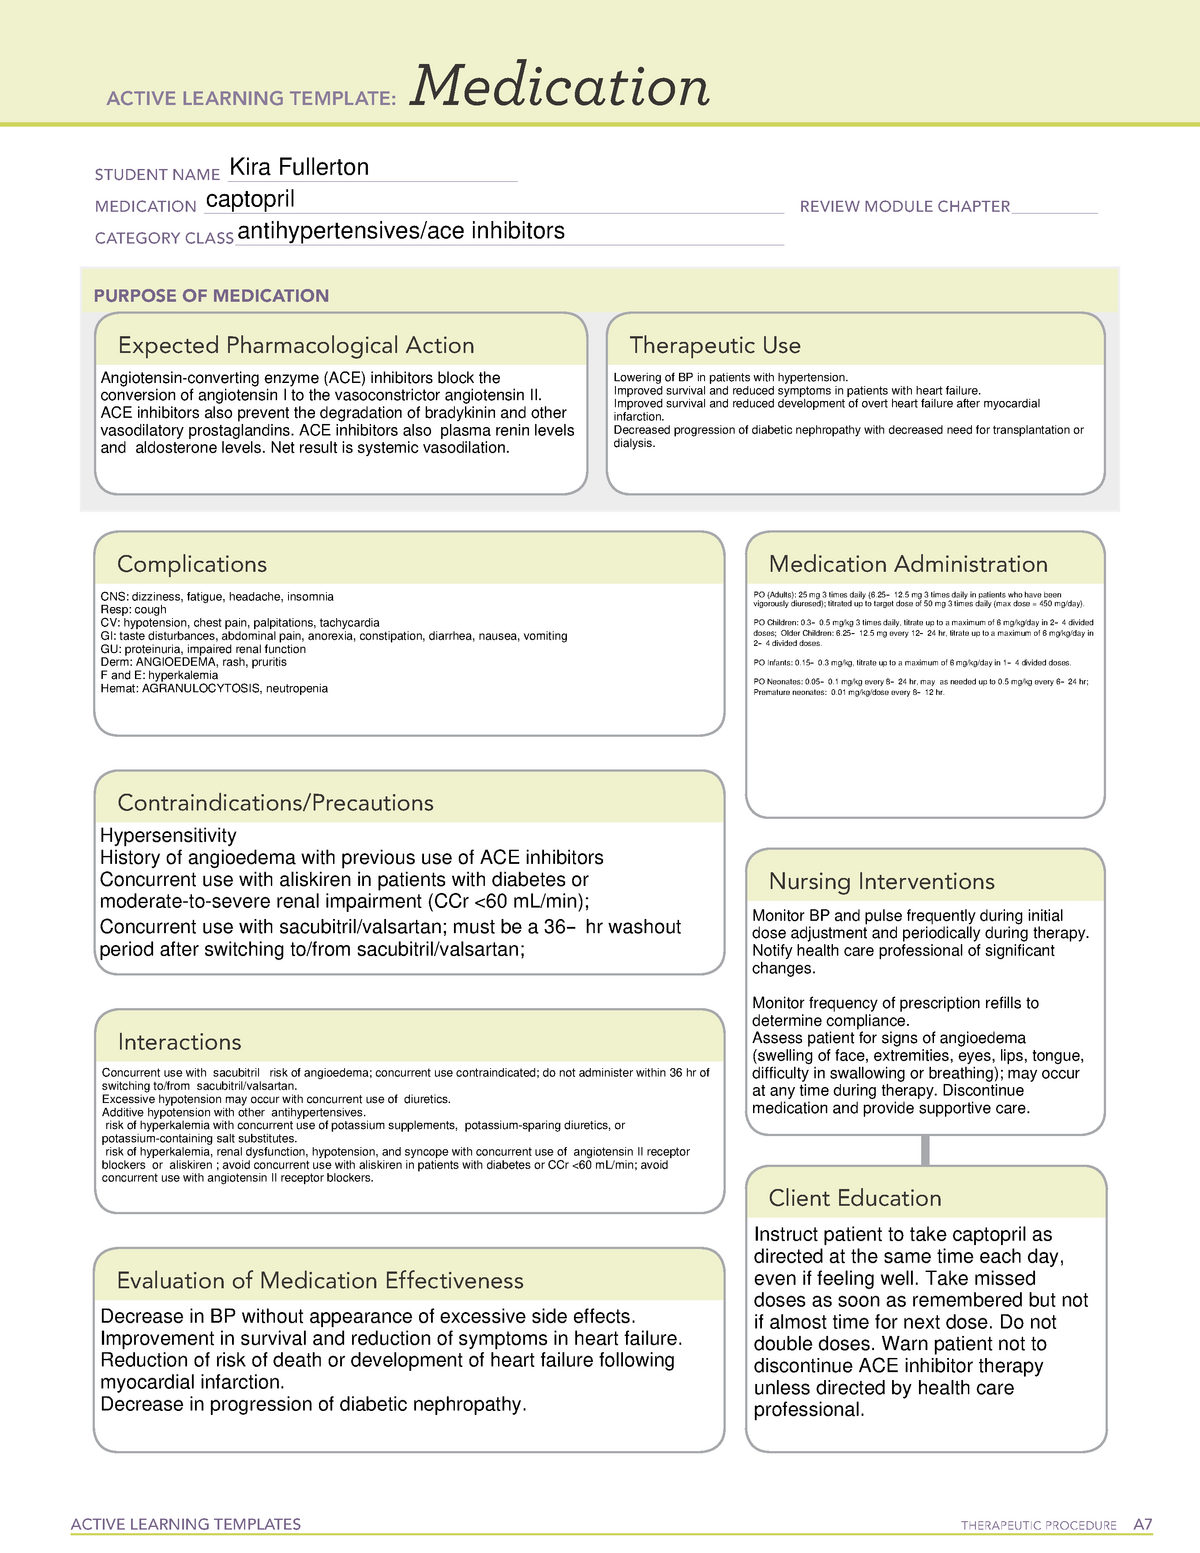 med-captopril-ati-medications-sheet-active-learning-templates